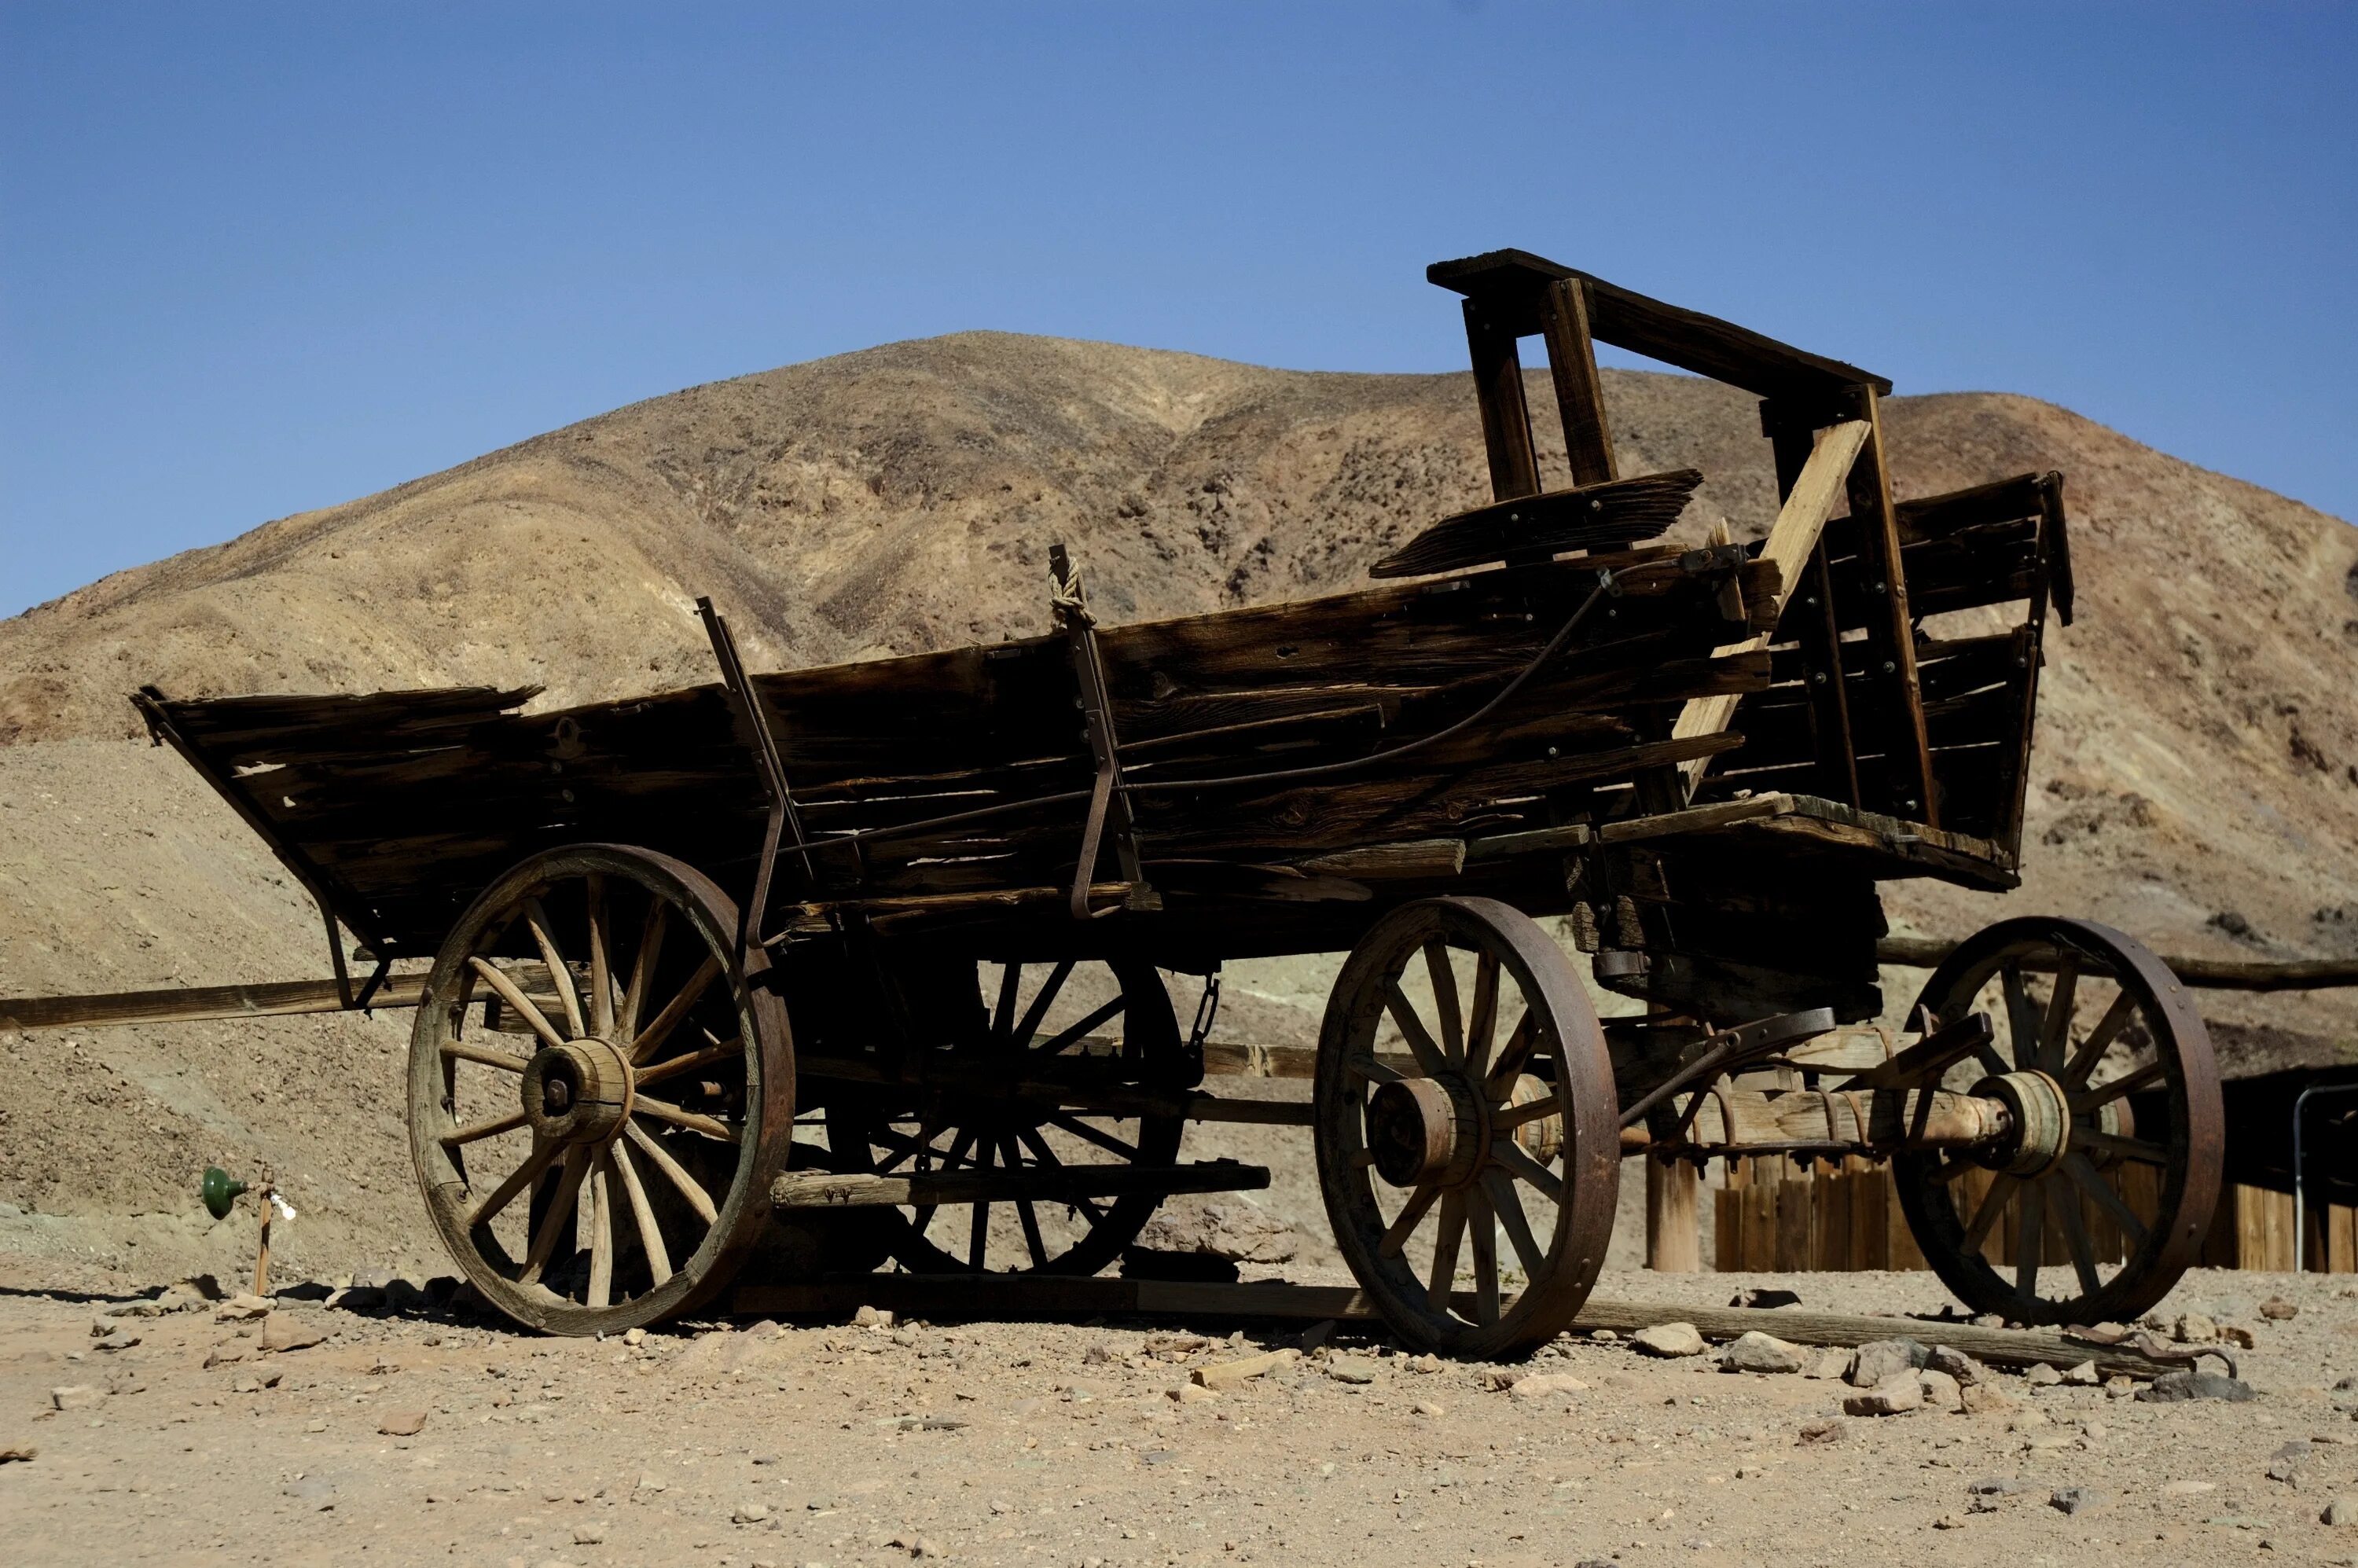 Сочная телега. Wagon – тележка, повозка. Телега старинная. Телега в пустыне. Повозка в пустыне.